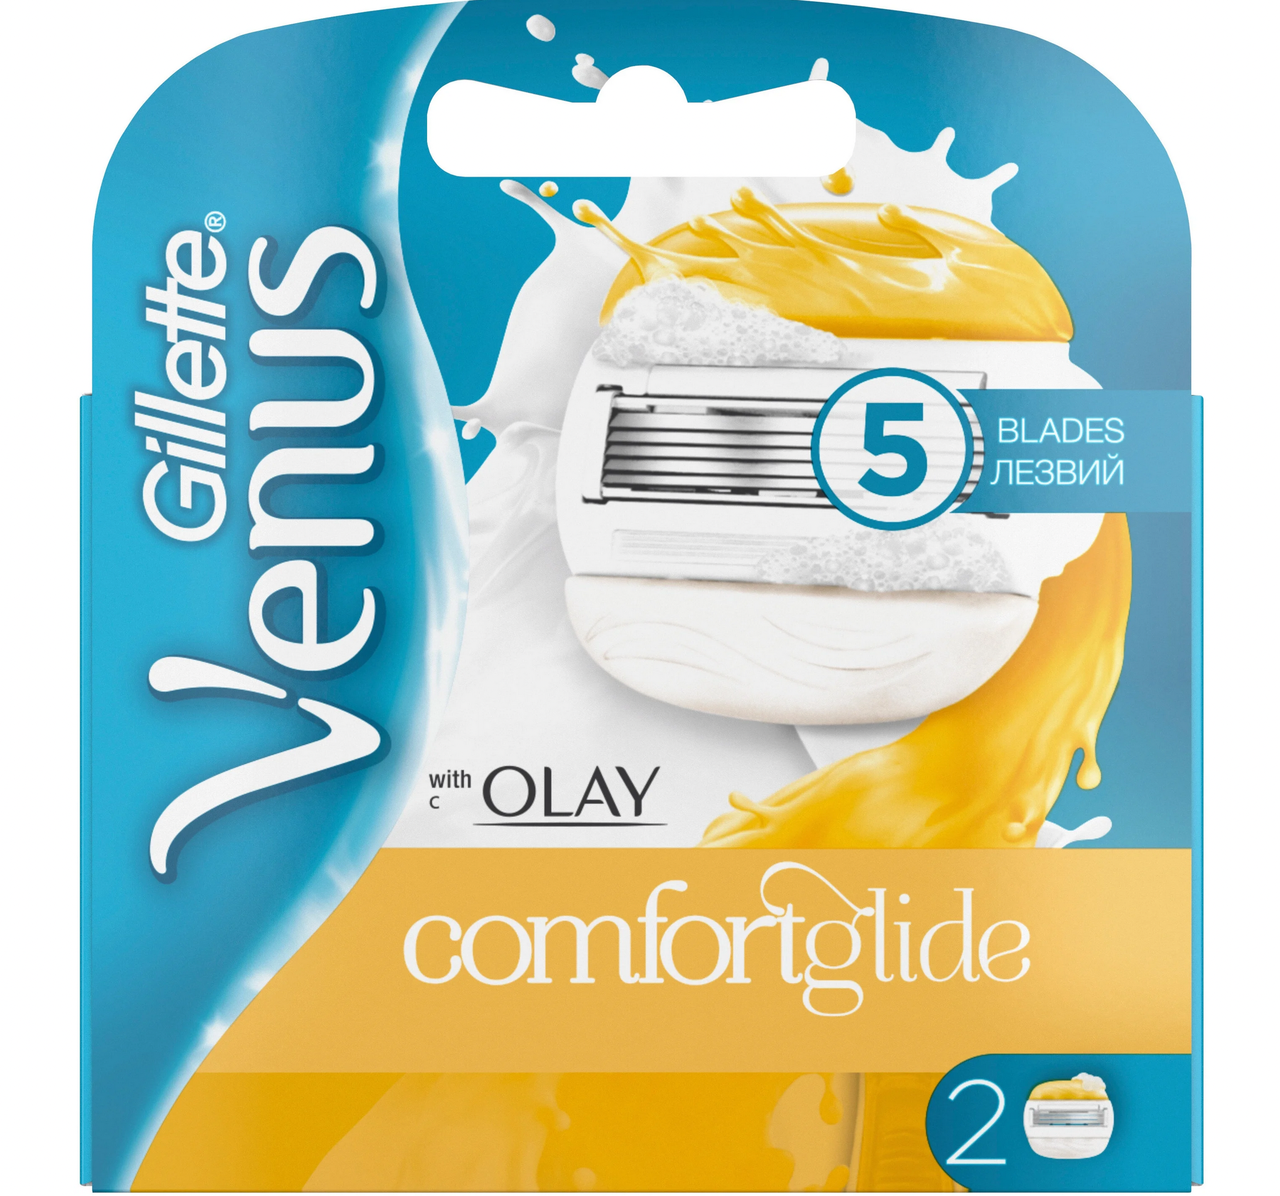 Сменные кассеты  Gillette Venus ComfortGlide Olay ( 2 шт )